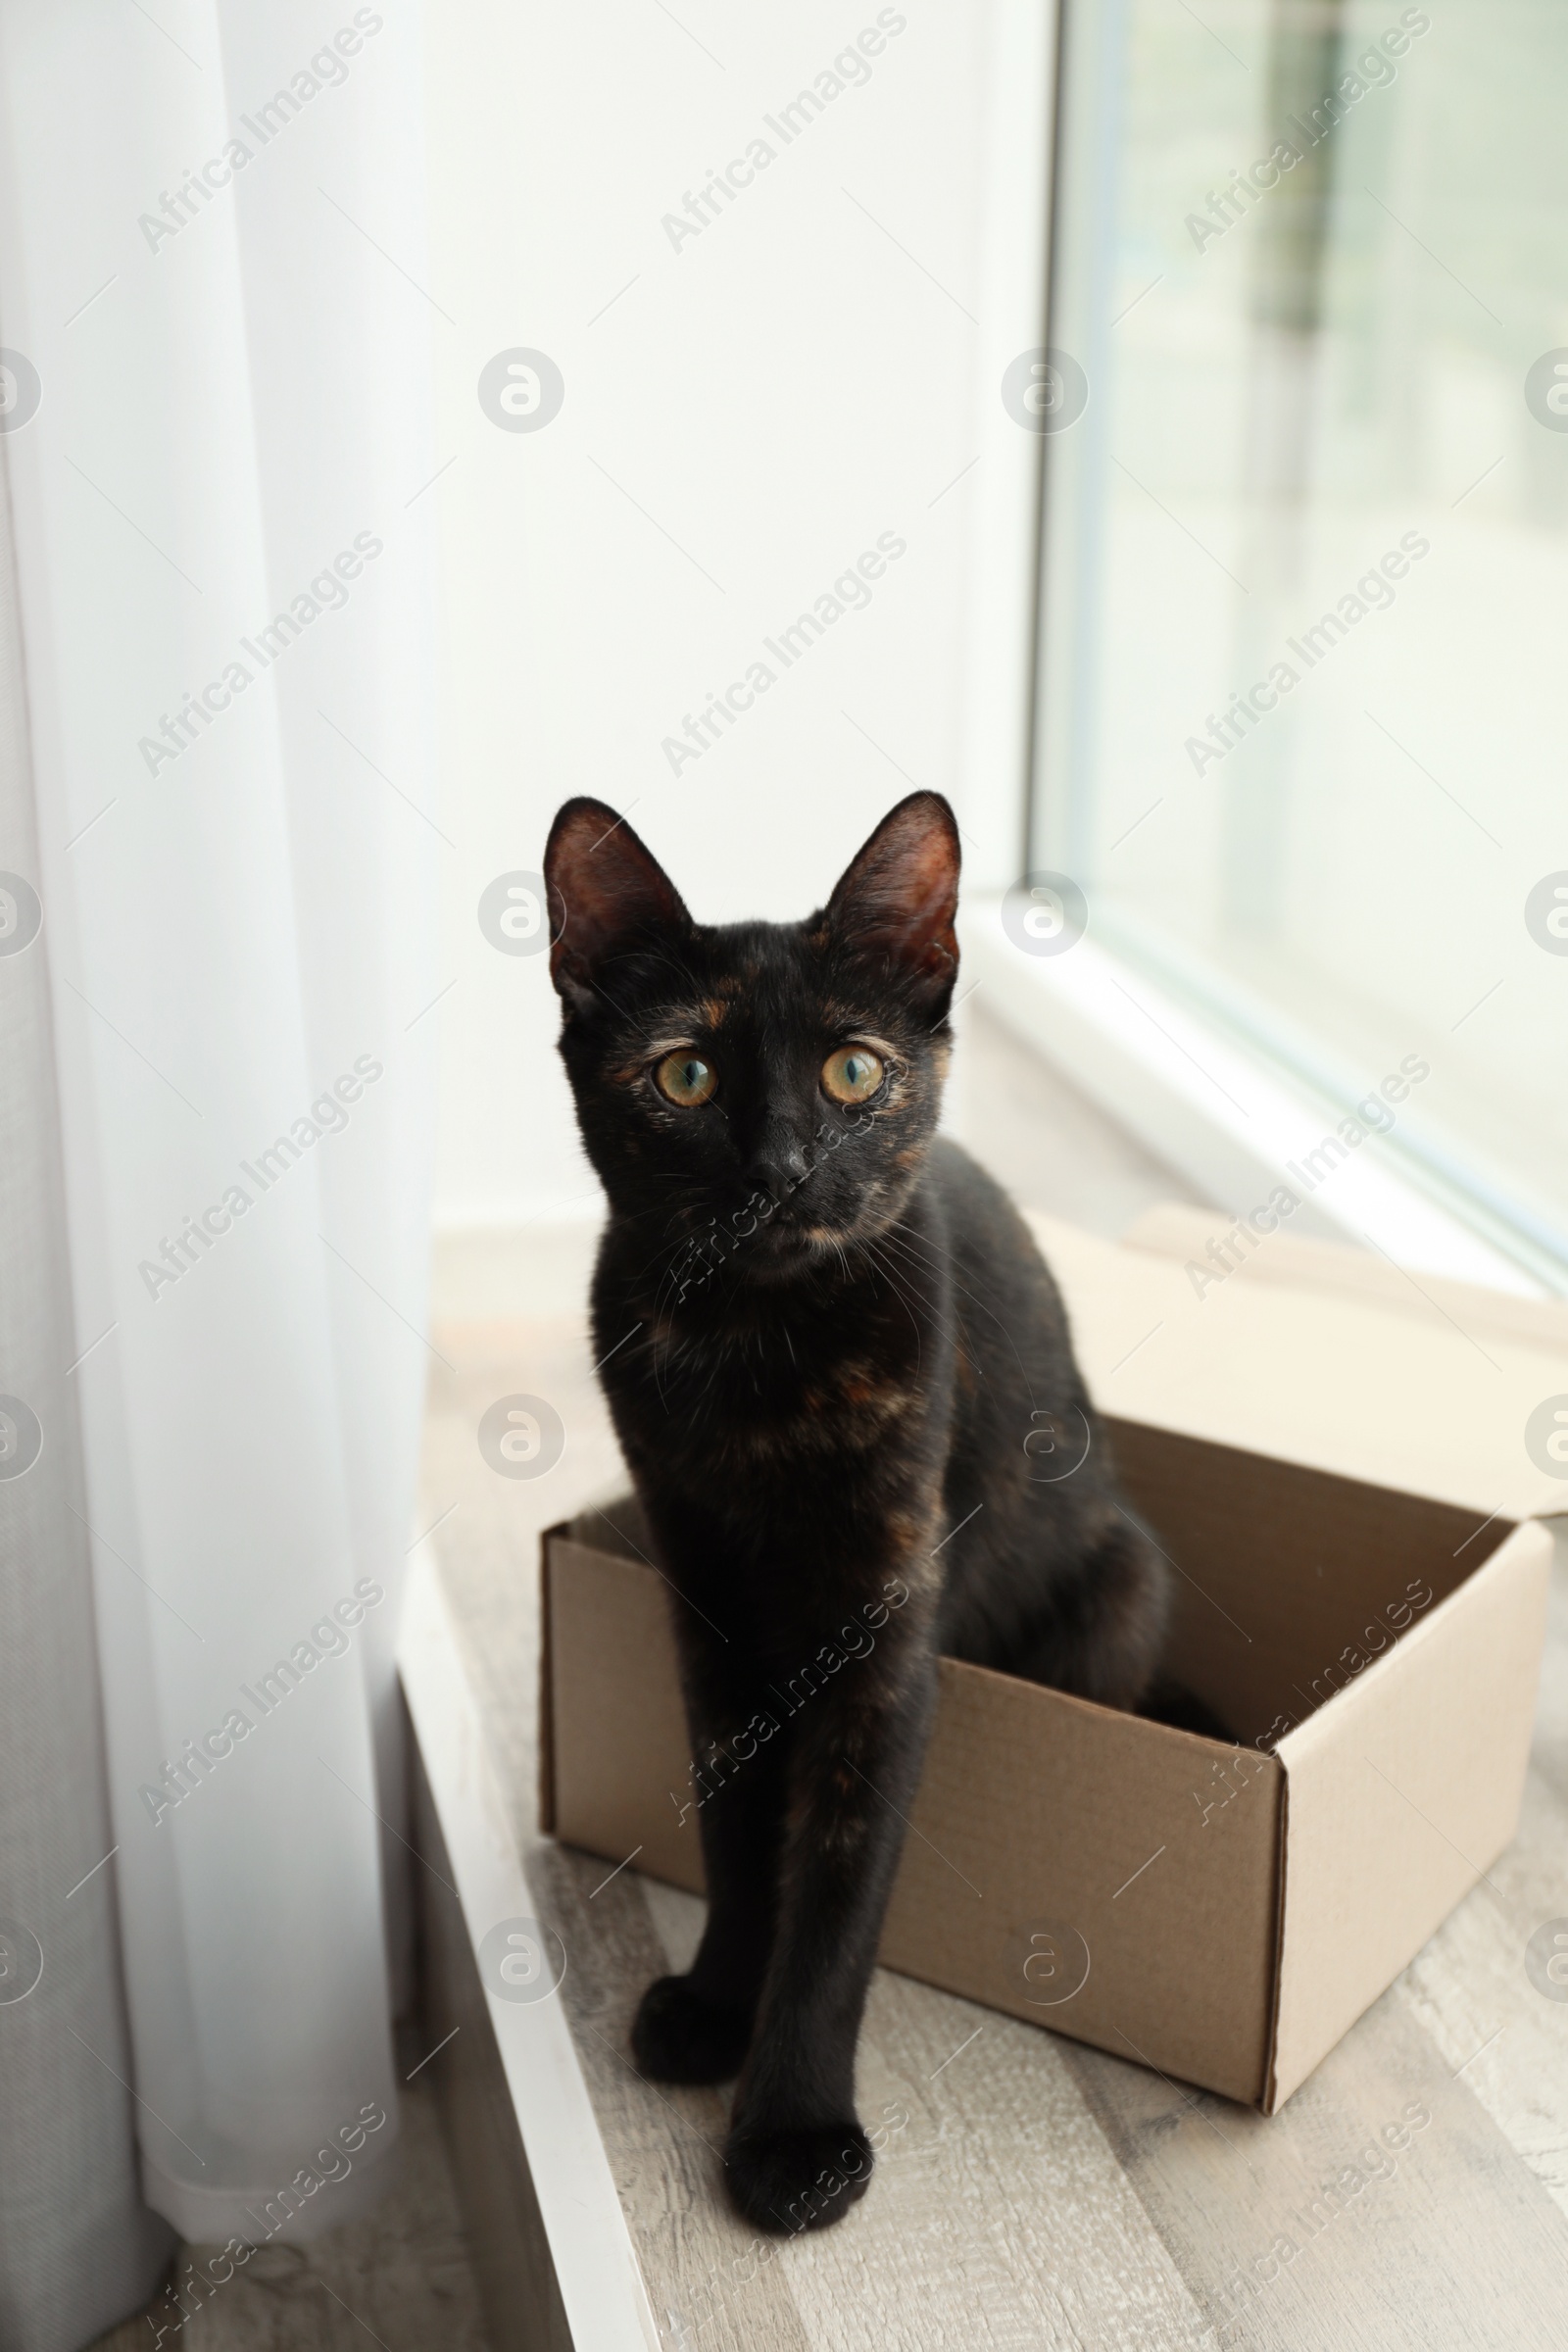 Photo of Cute black cat sitting in cardboard box near window at home